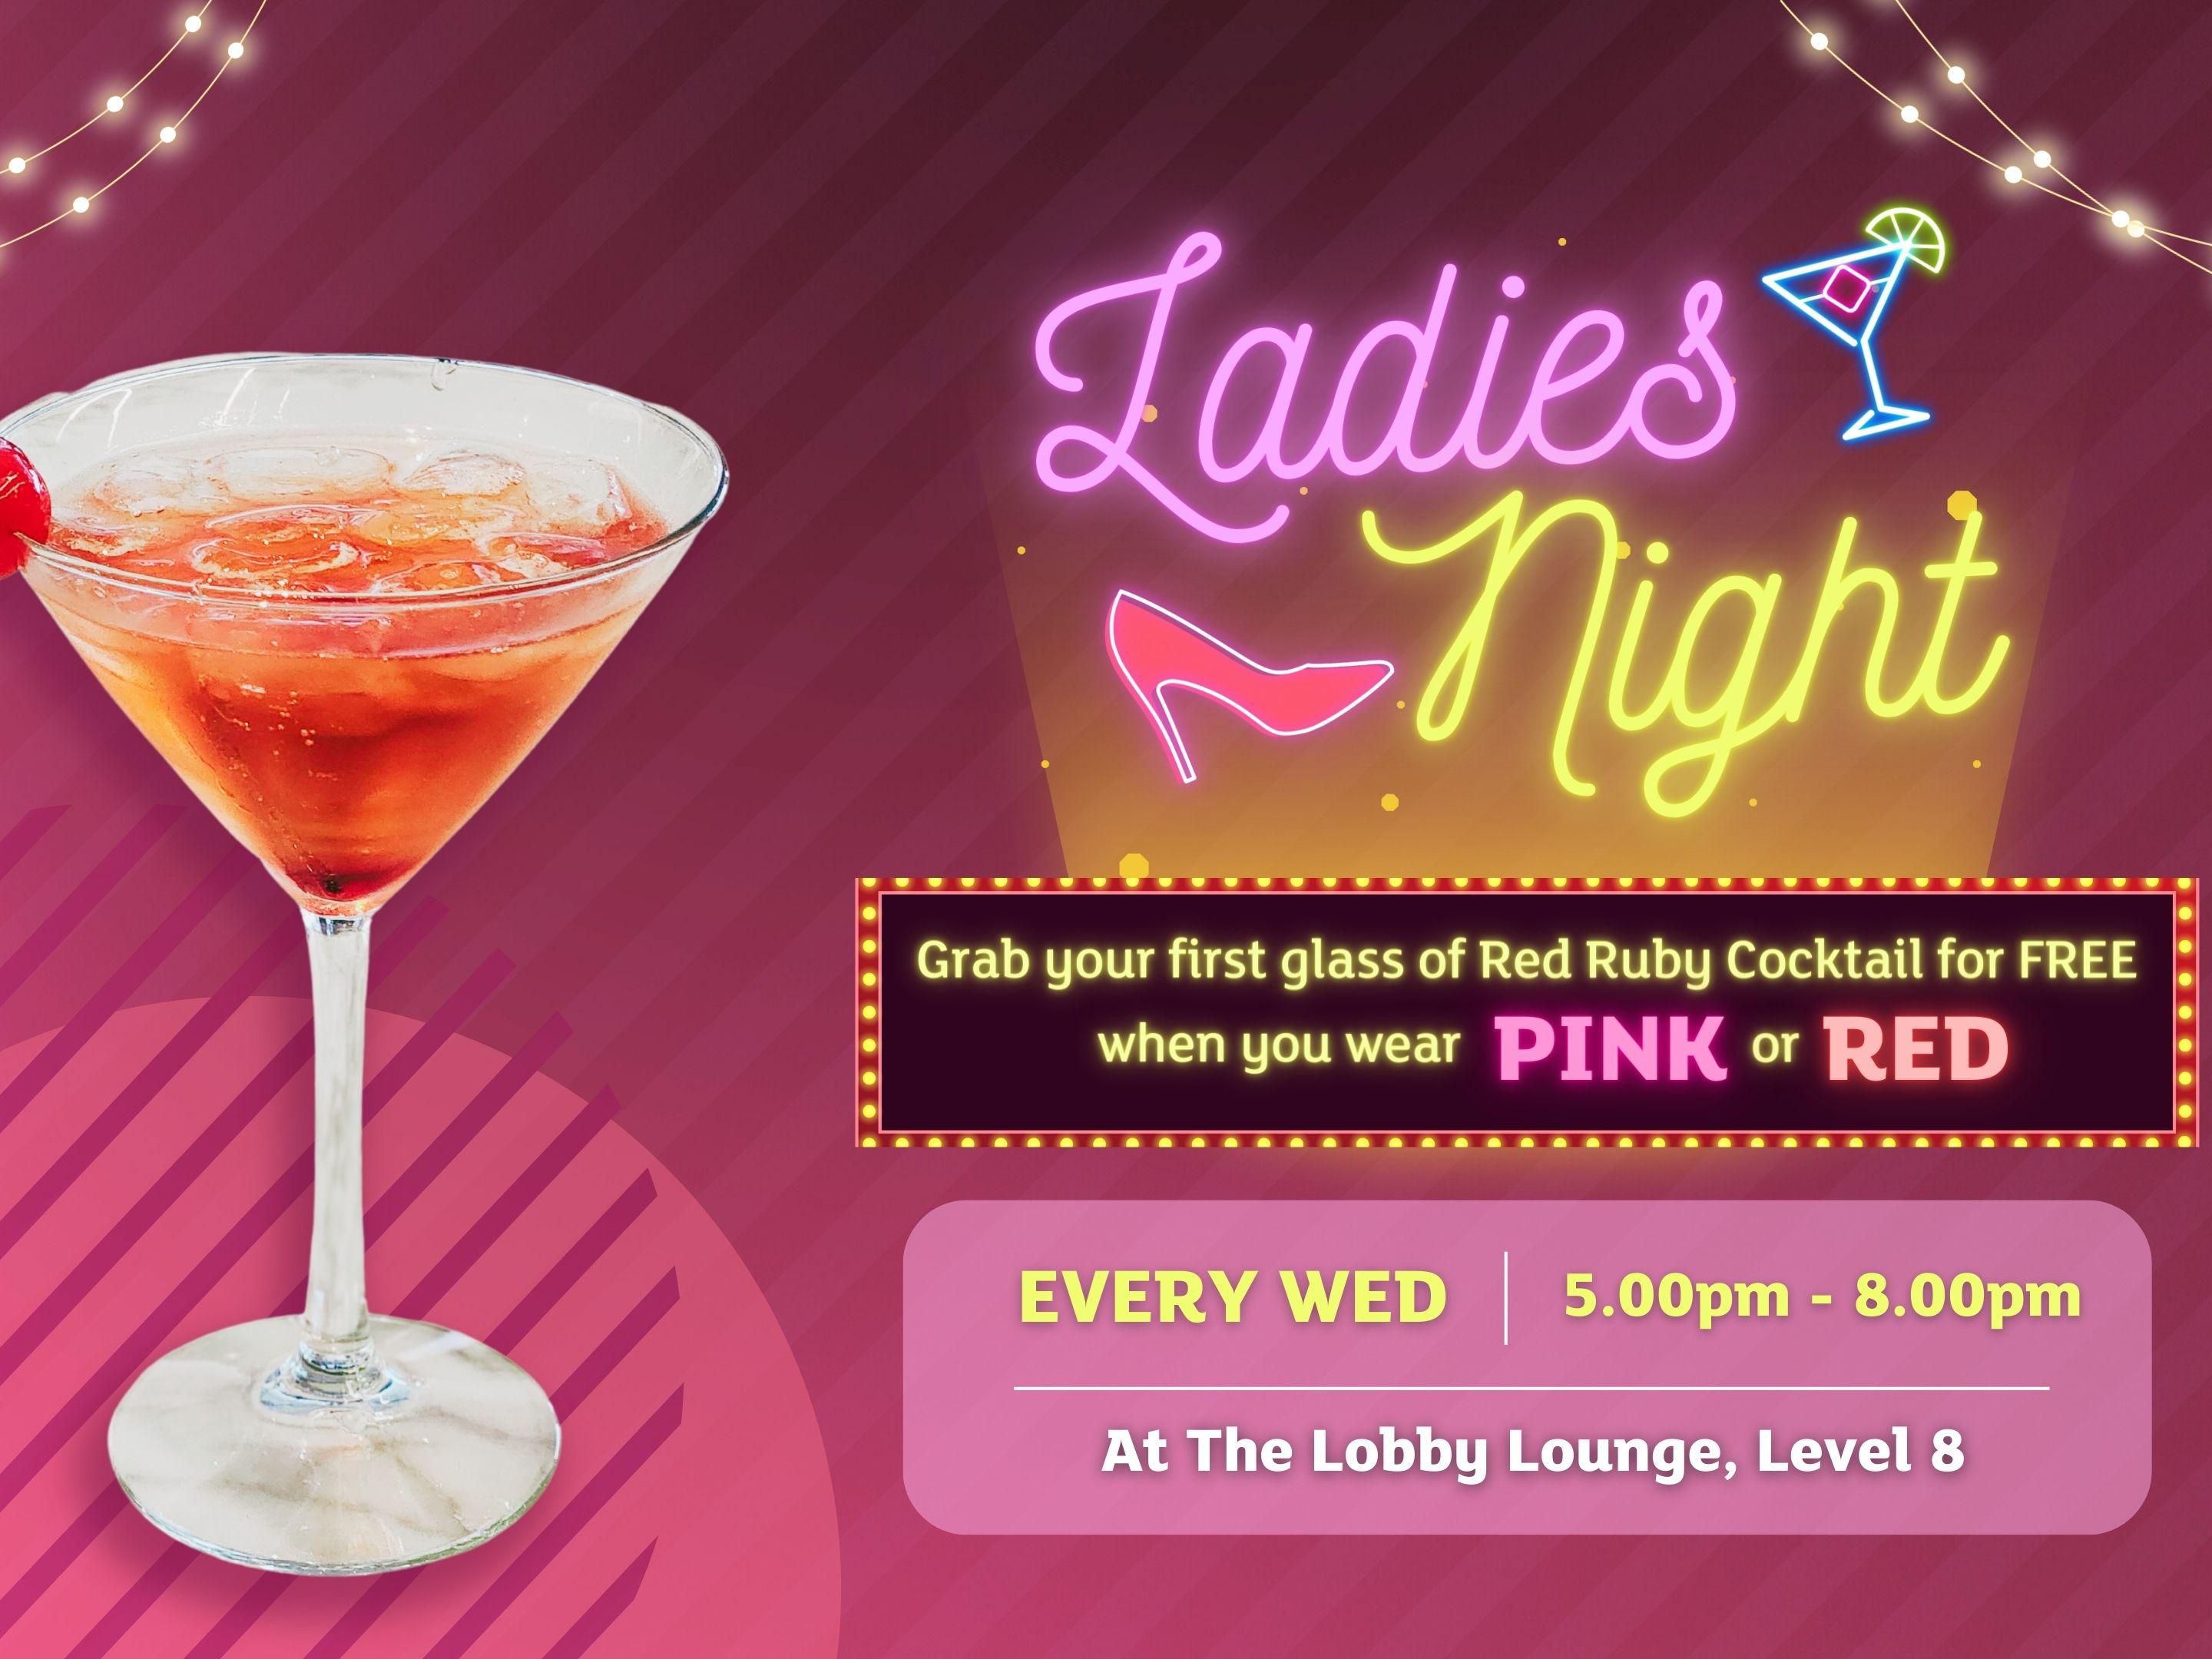 Ladies Night at The Lobby Lounge